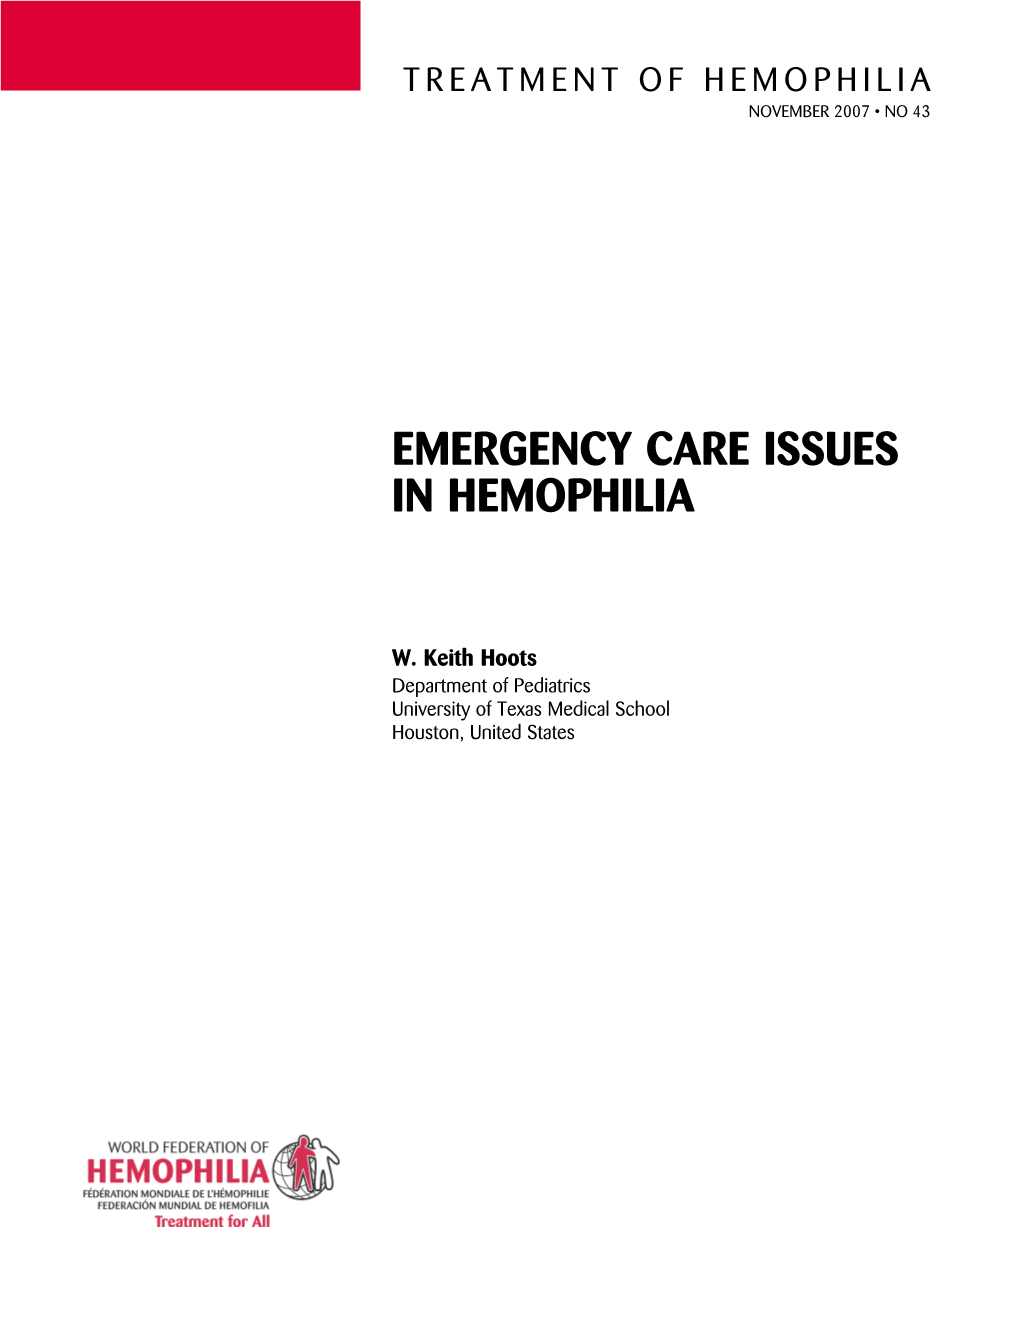 Emergency Care Issues in Hemophilia